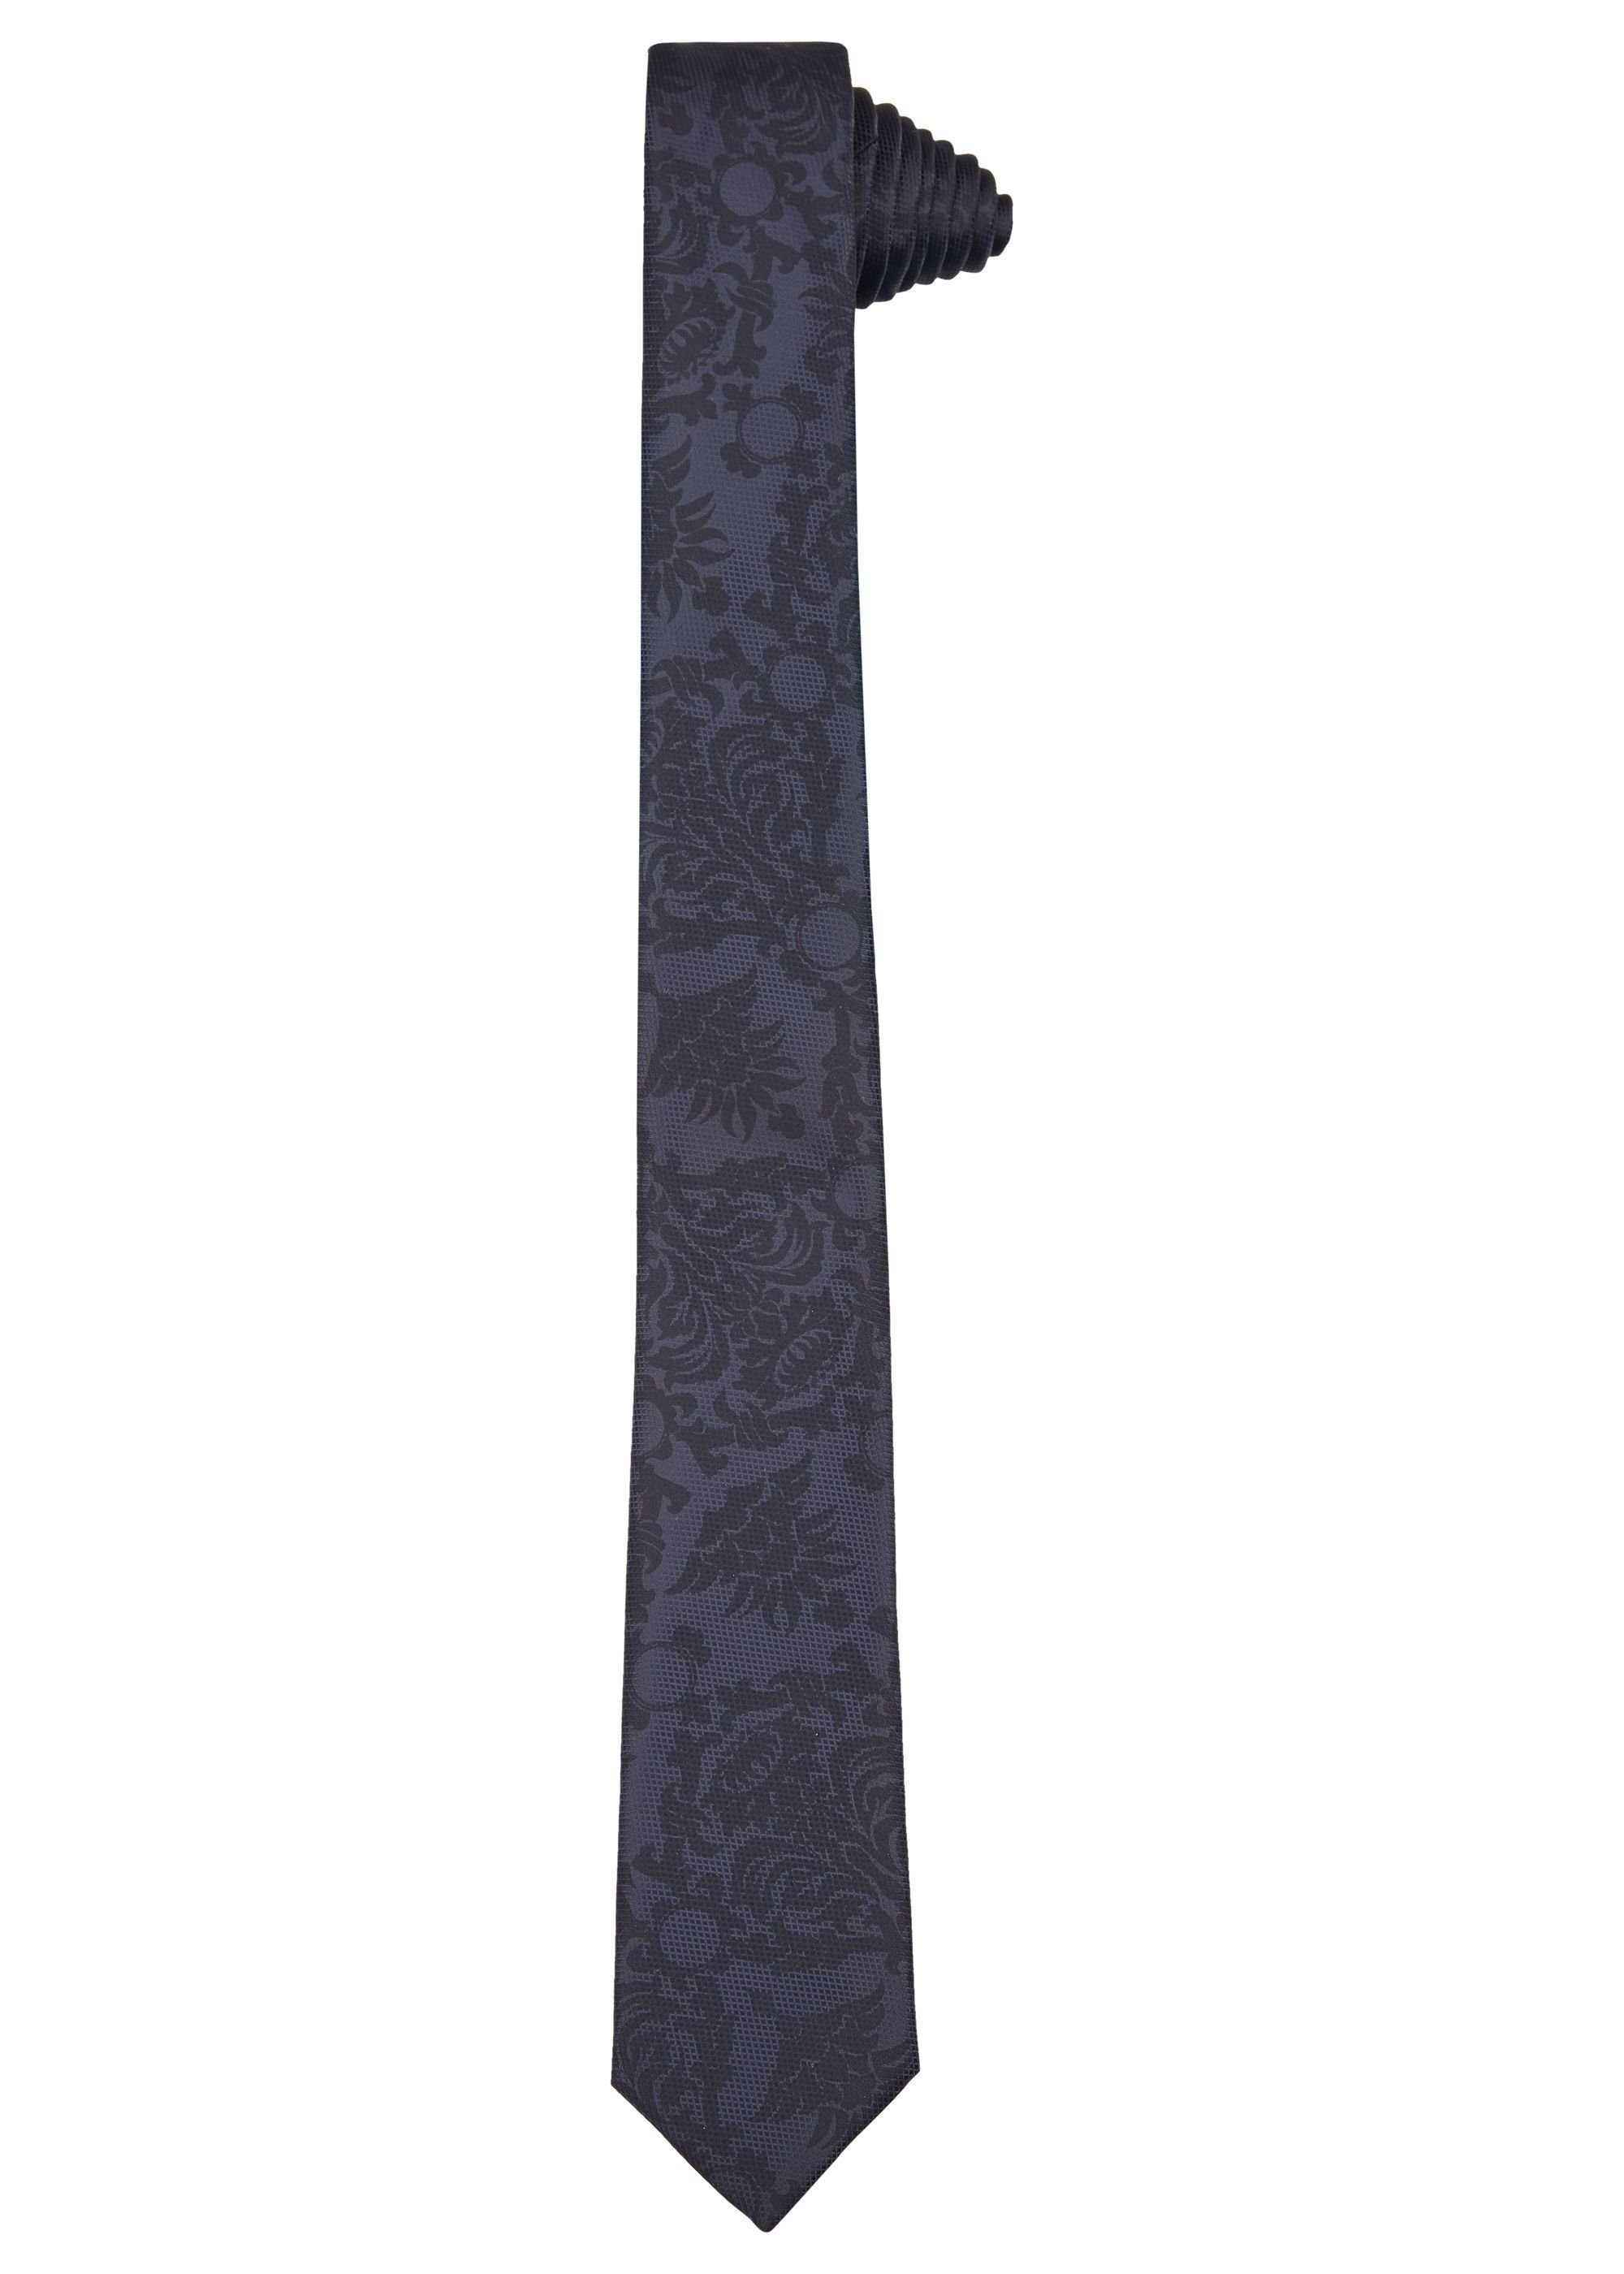 aus PARIS Krawatte hochwertiger HECHTER Kunstfaser